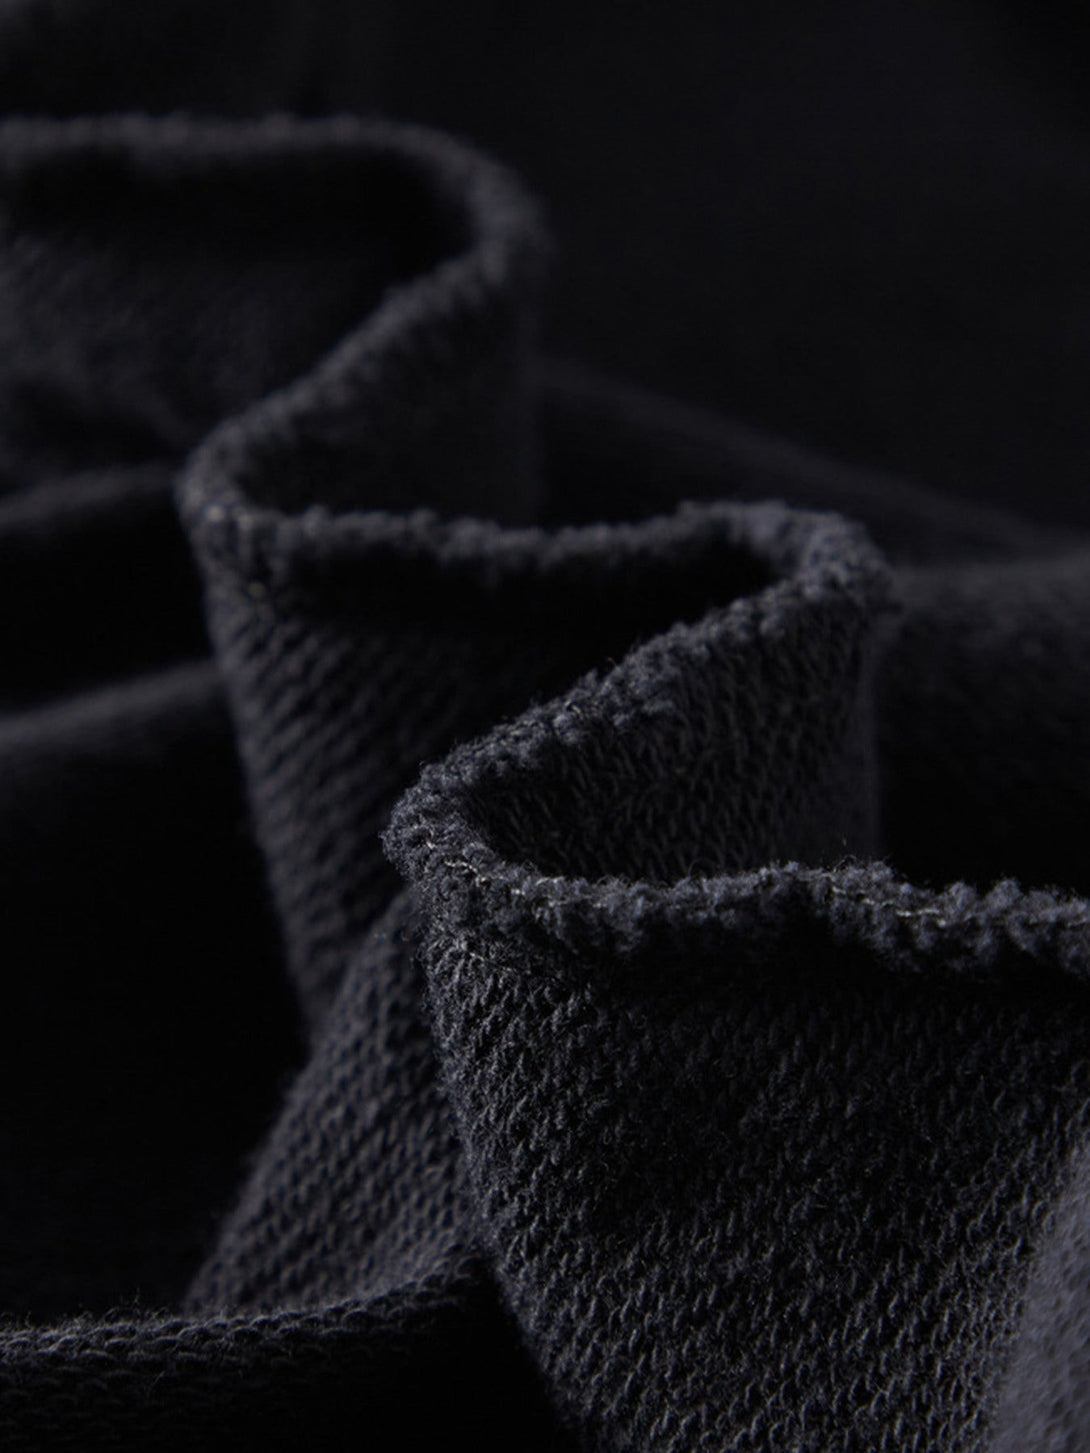 Majesda® - Dark Style Hooded Loose Sweatshirt - 1697- Outfit Ideas - Streetwear Fashion - majesda.com